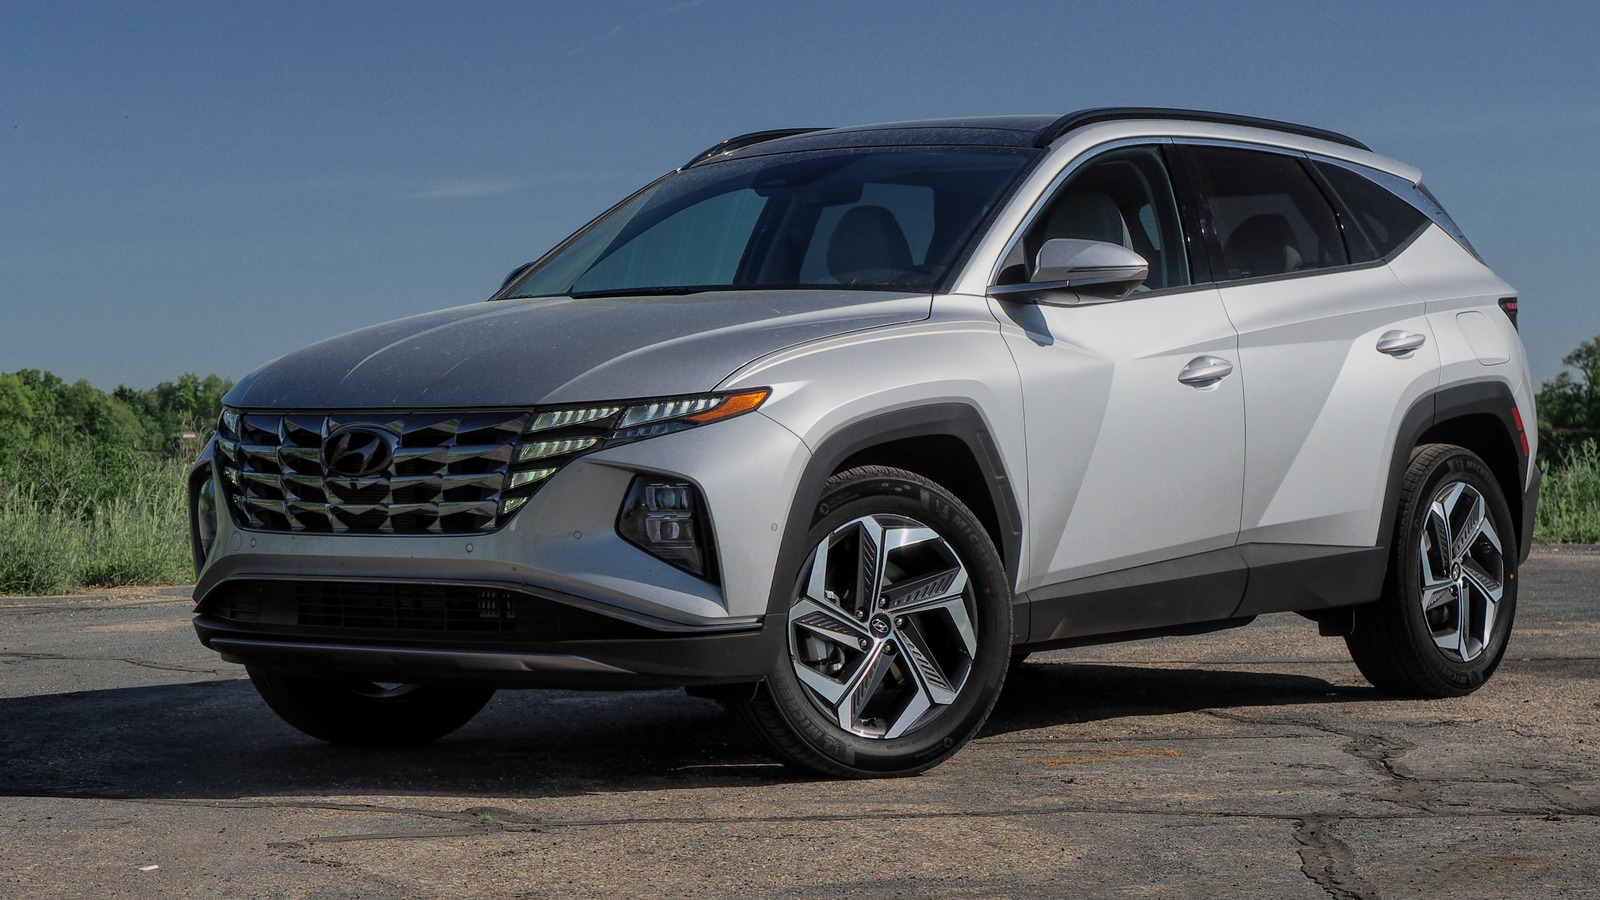 2023 Hyundai Tucson Hybrid Review: Electrification Without The